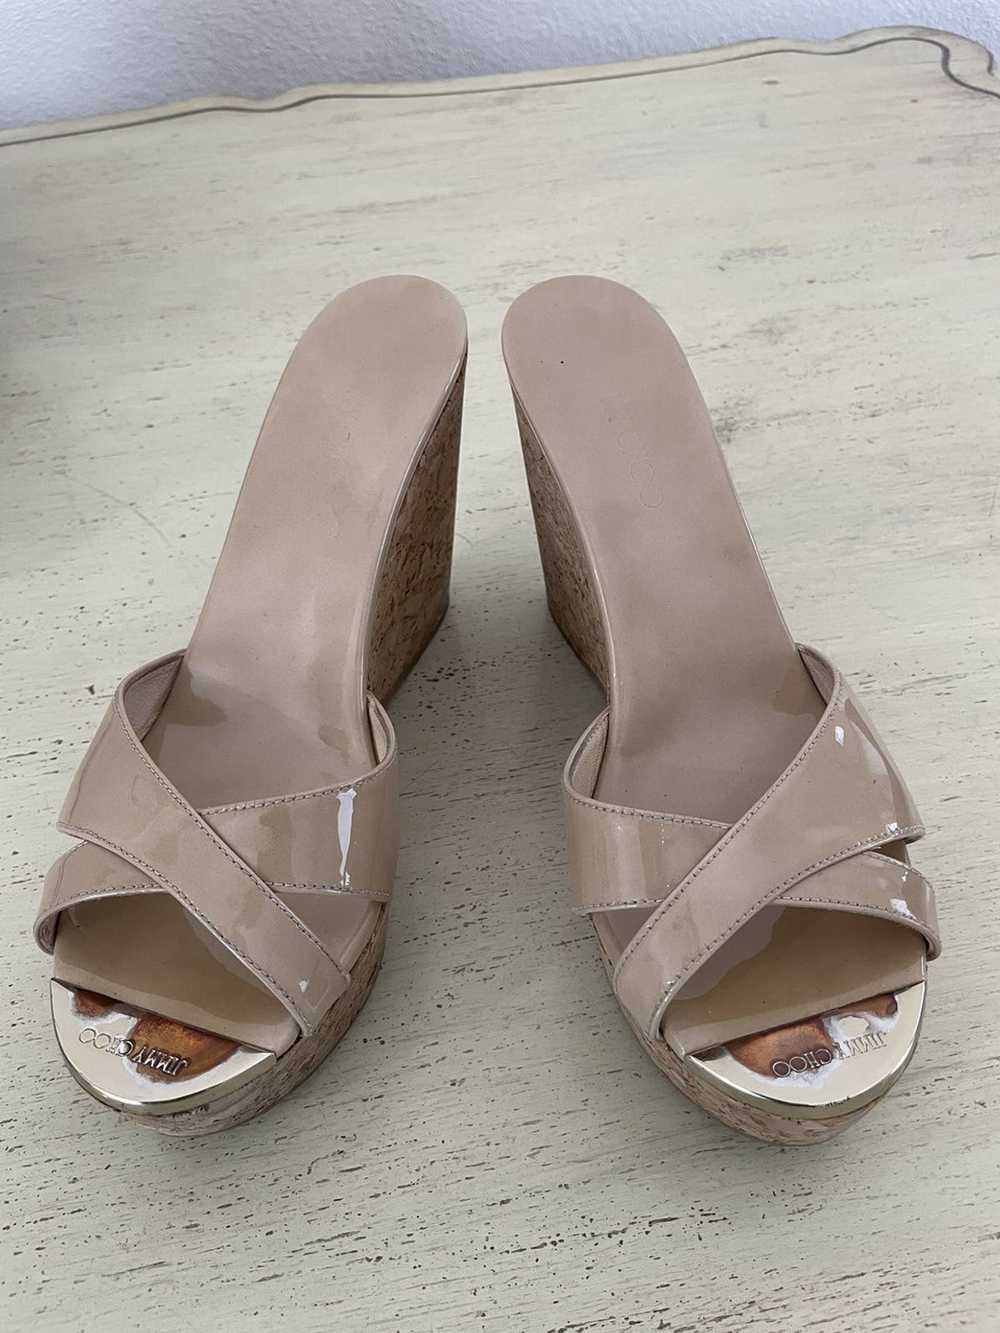 Jimmy Choo Patent Pandora Cork Wedge Sandals - image 2